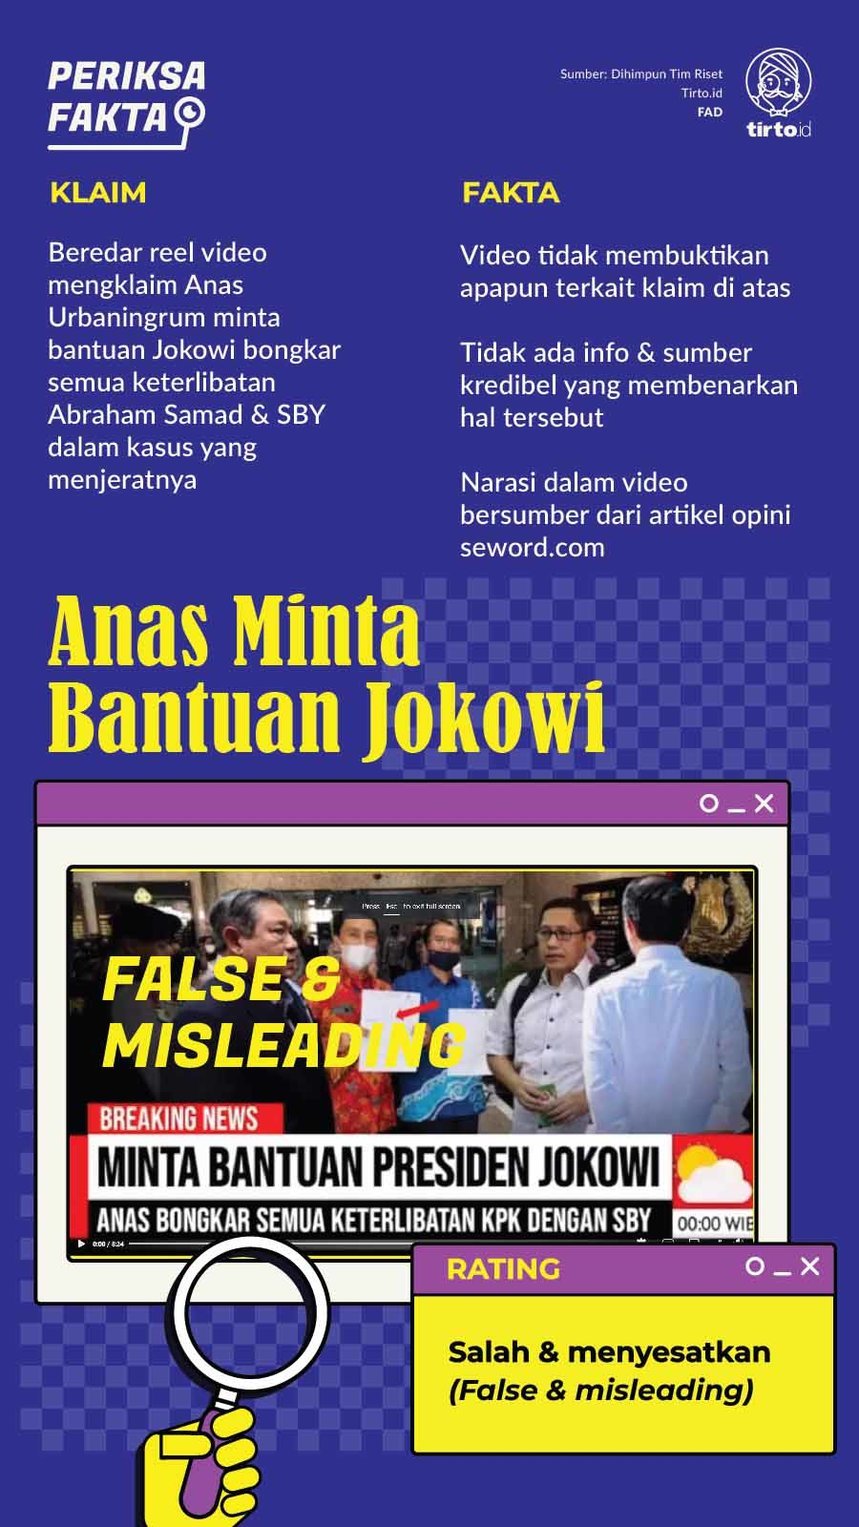 Infografik Periksa Fakta Anas Minta bantuan Jokowi